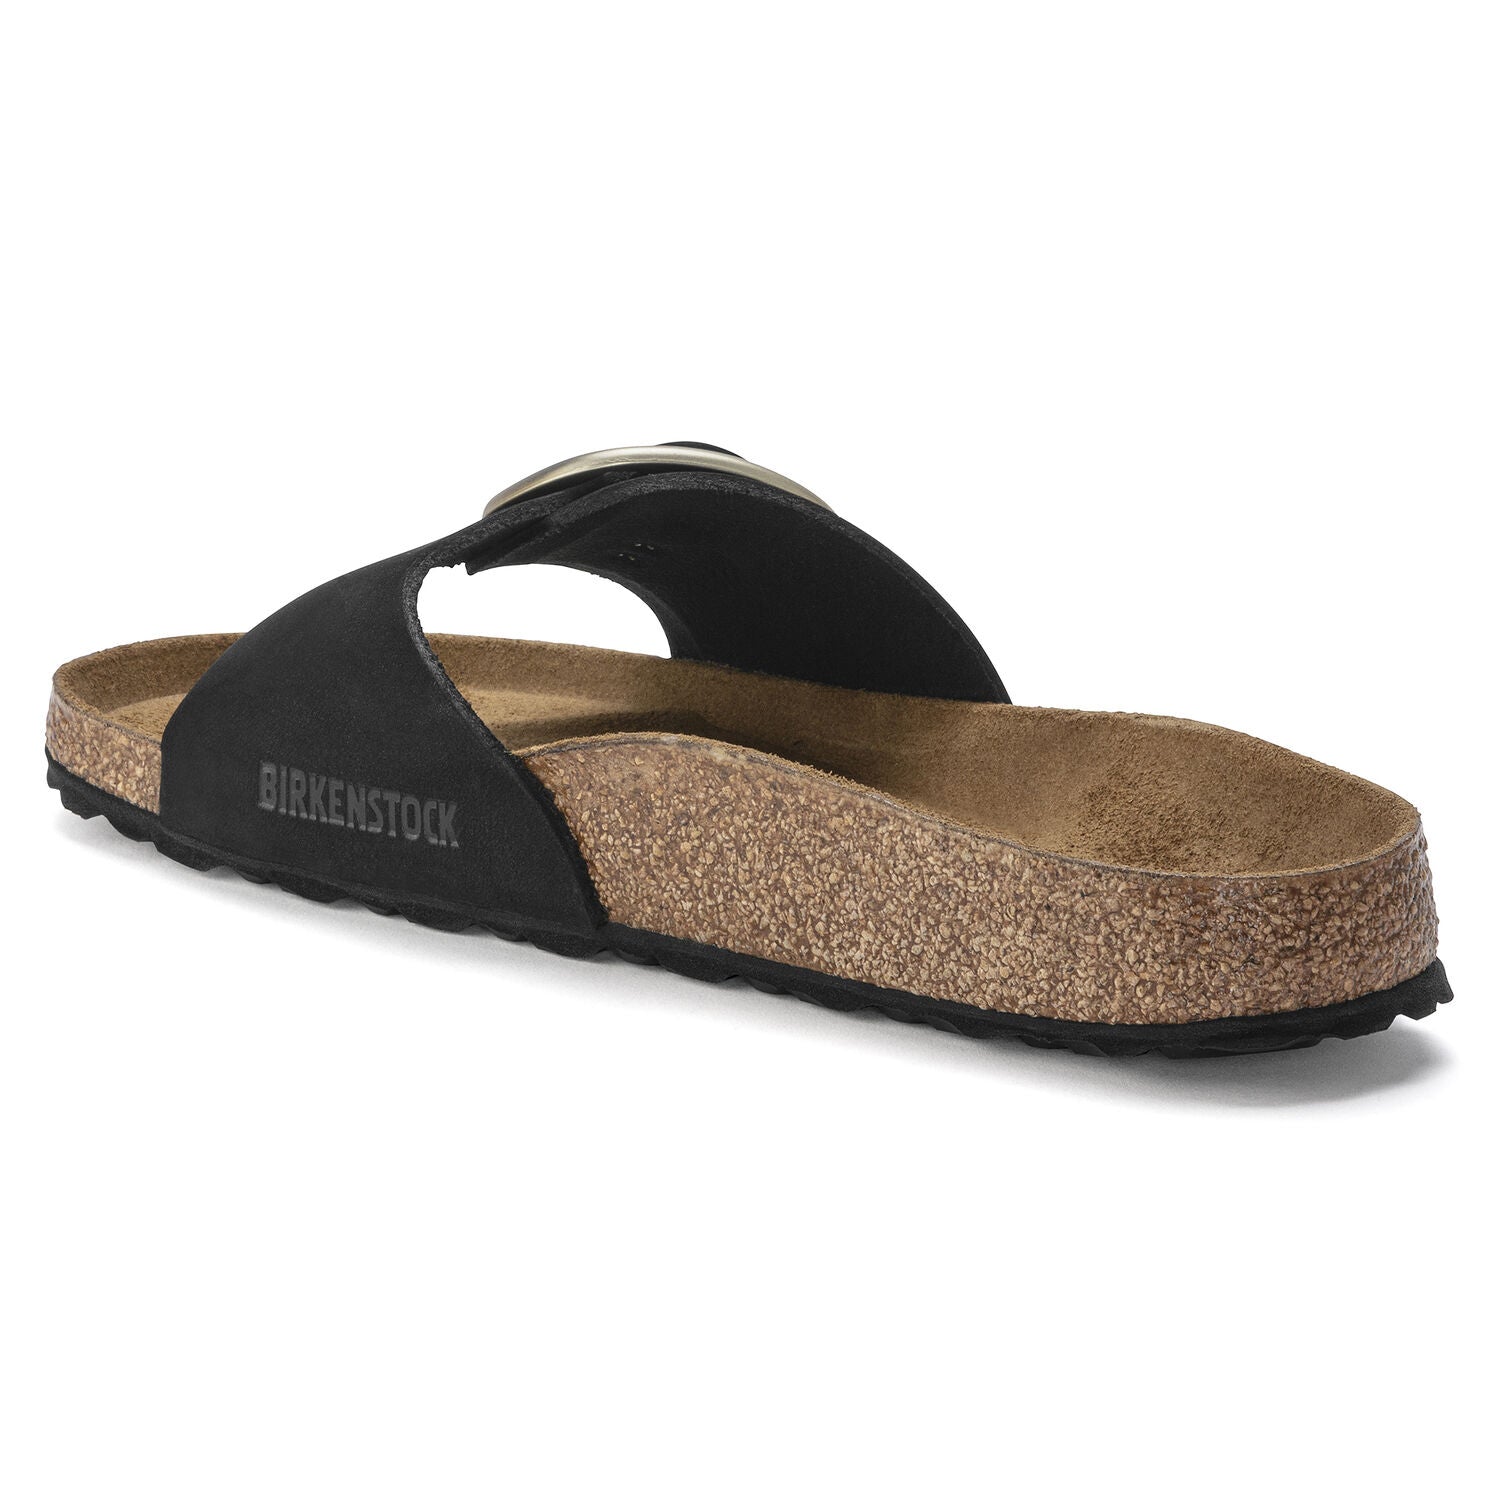 Birkenstock Sandalias Sandals 1023373 Nubuck Blk Nubuck Black_shot2